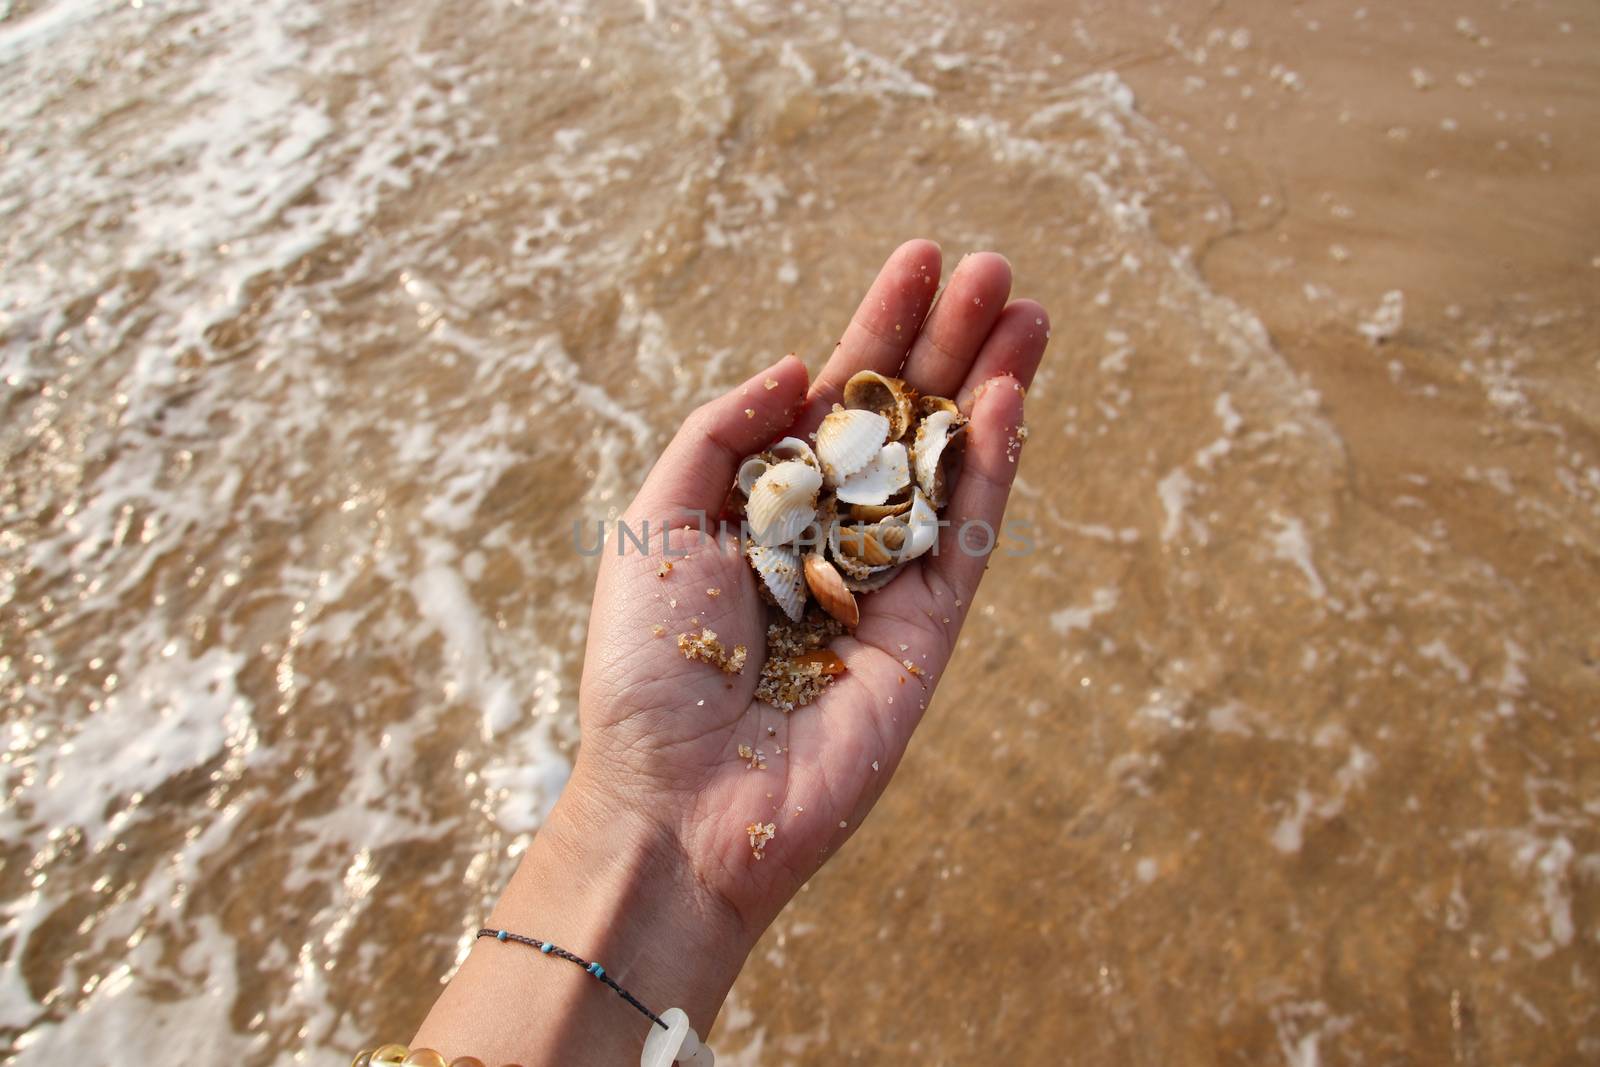 Enjoying the summer while social distancing at the beach collecting seashells